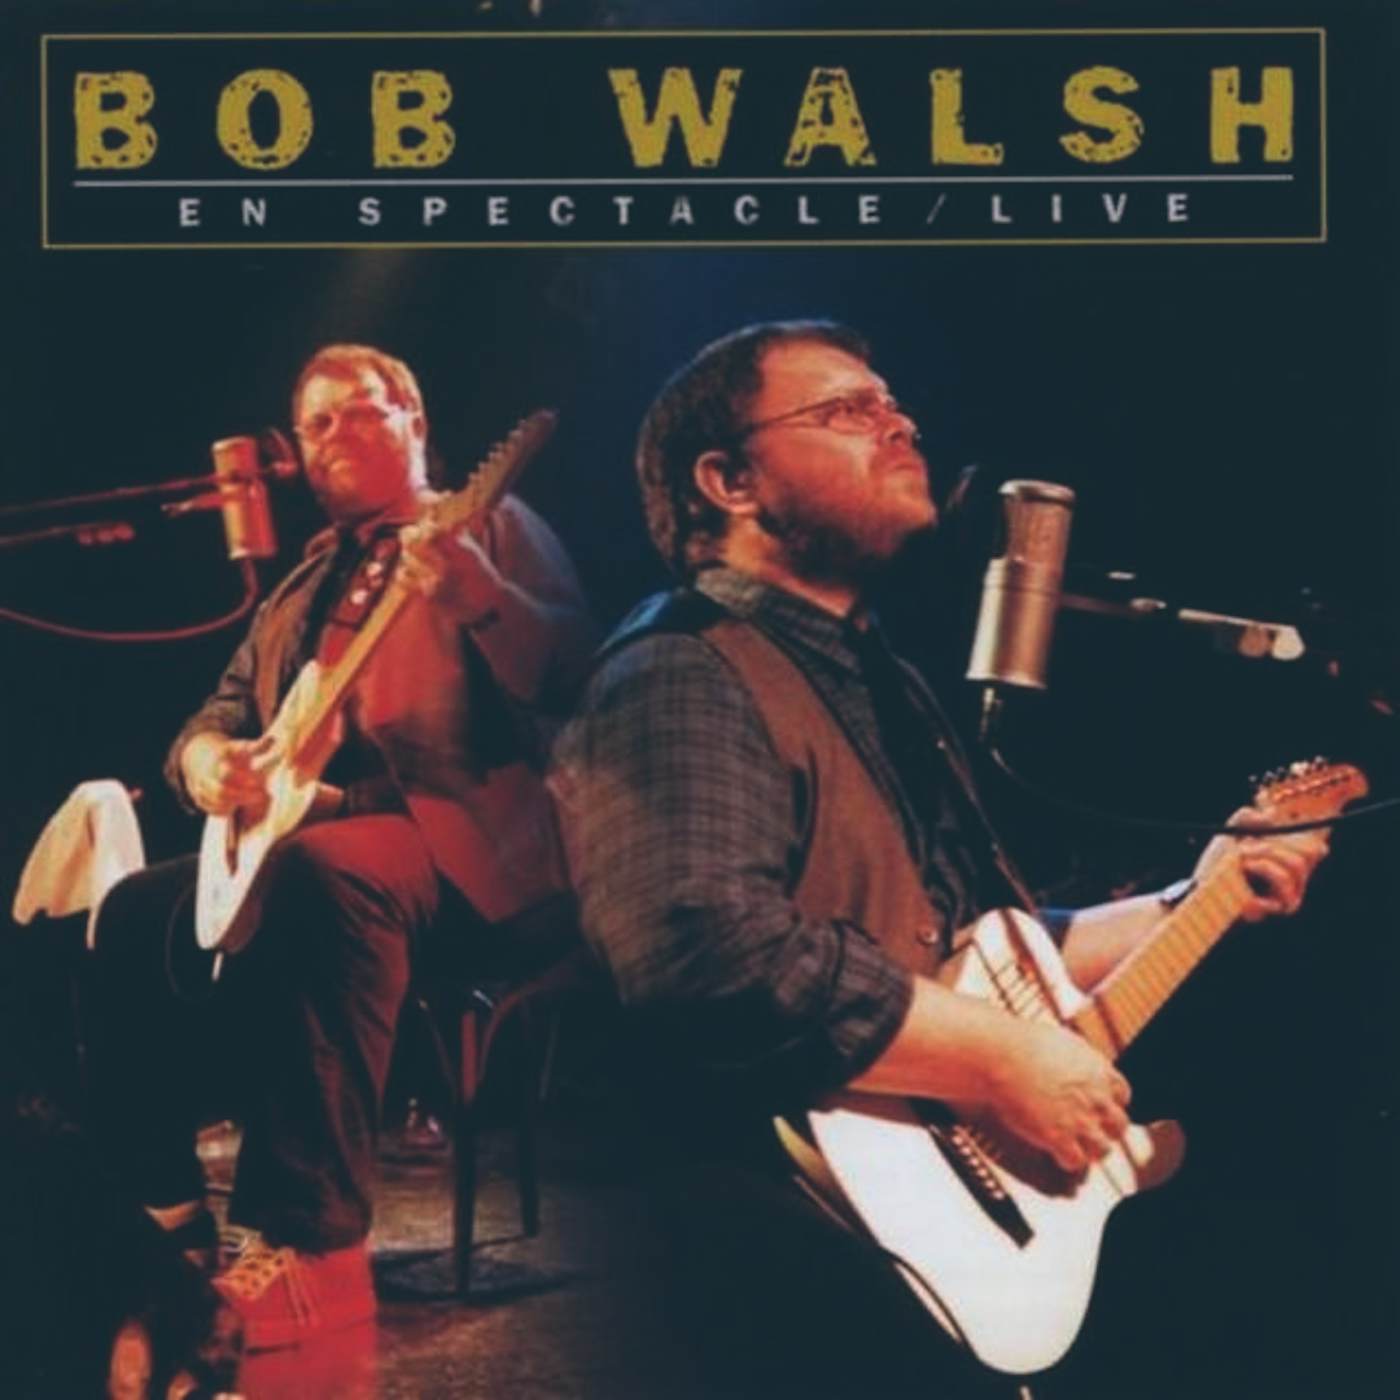 Bob Walsh